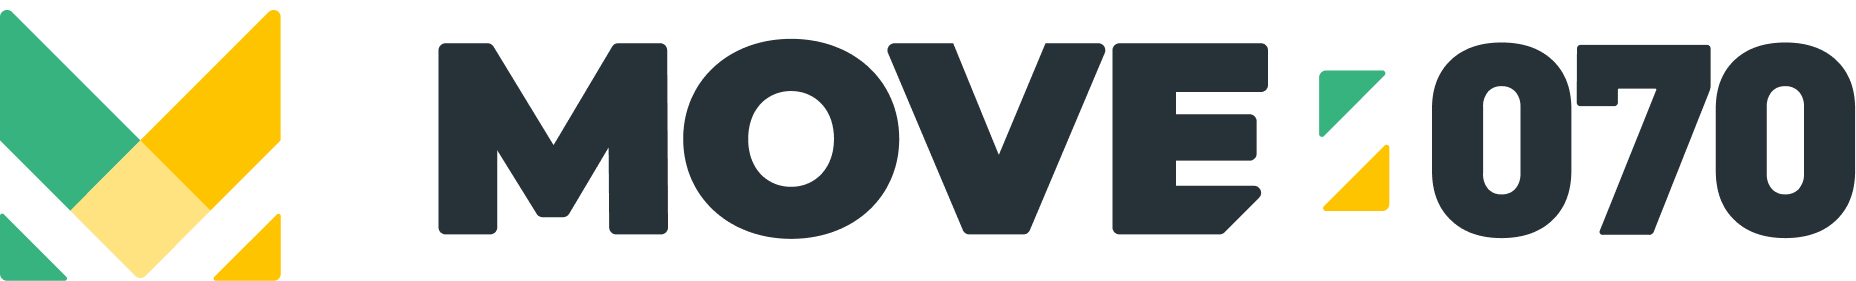 Move070 logo